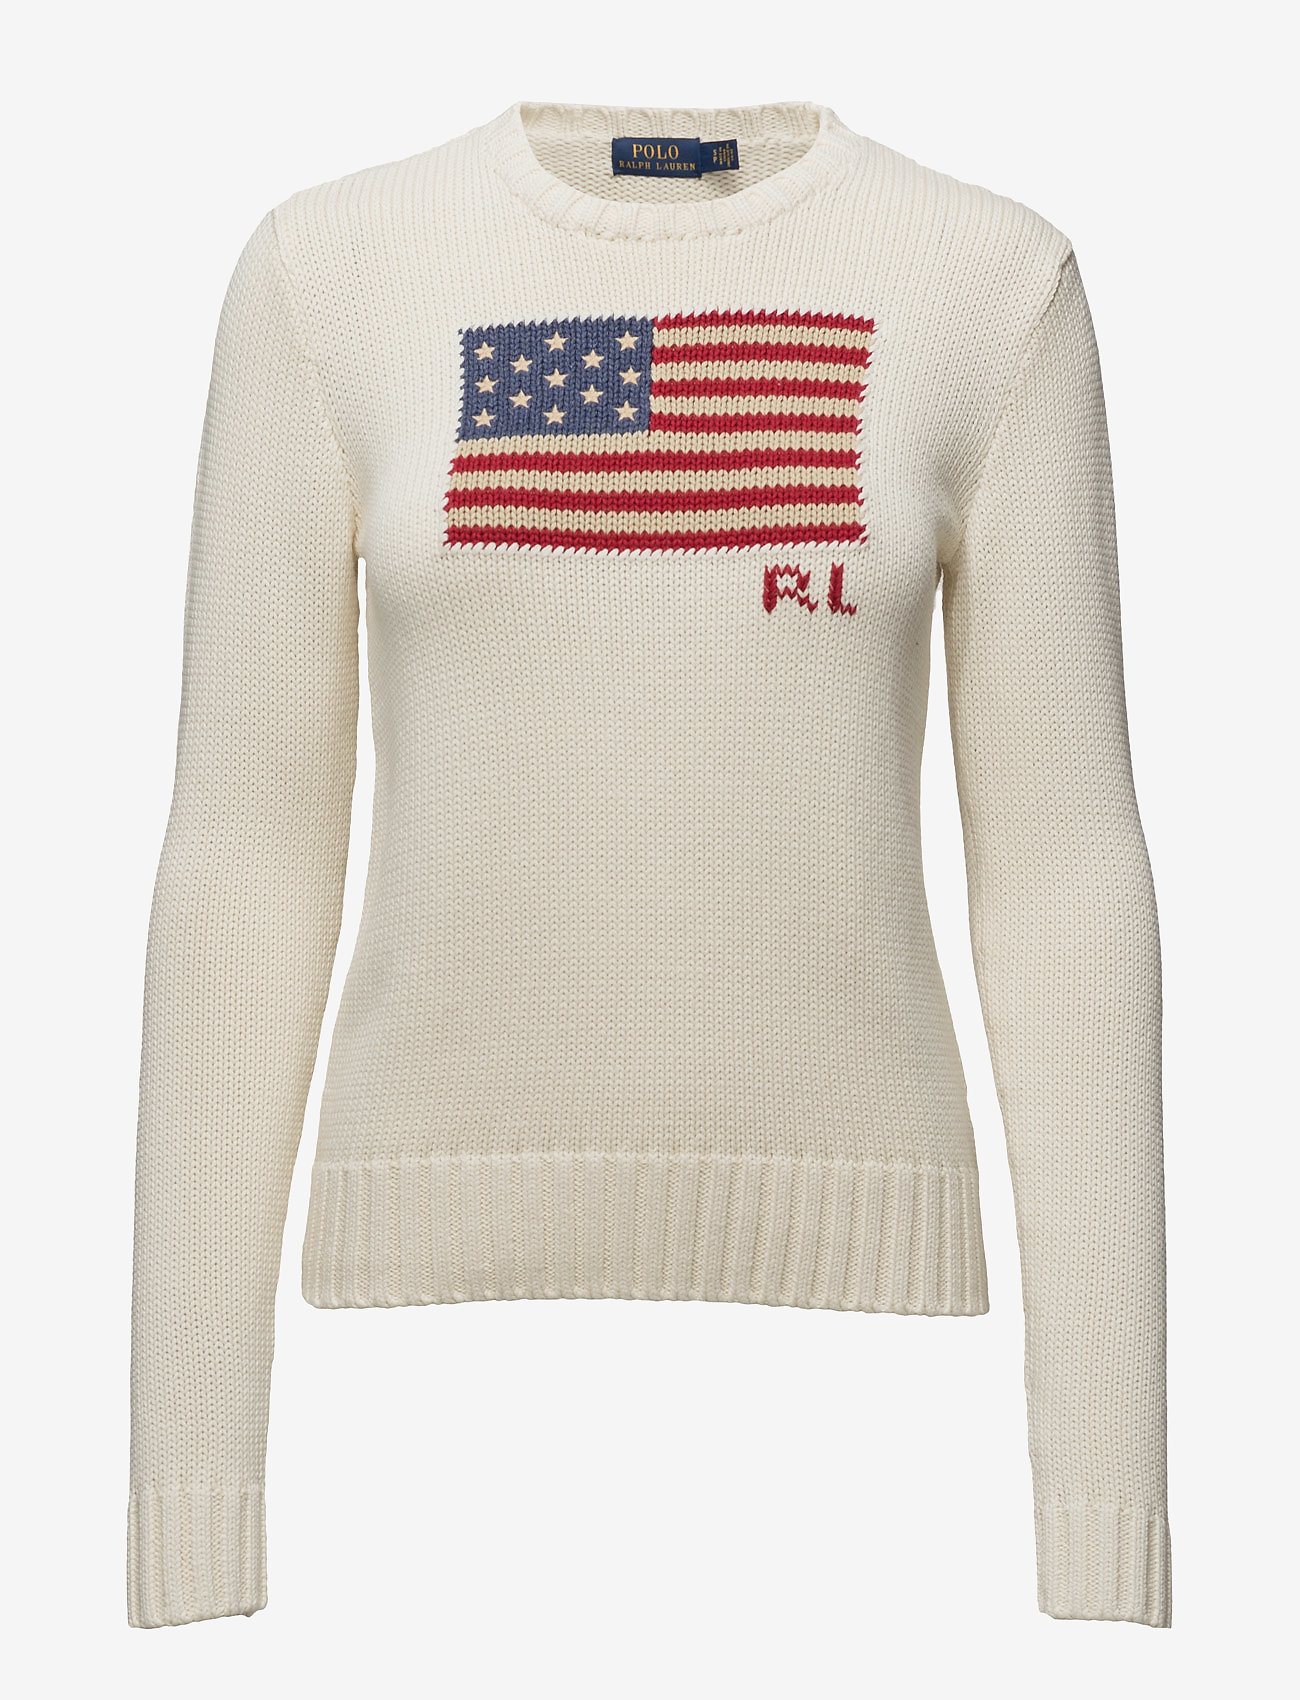 Flag Cotton Crewneck Sweater (Cream 